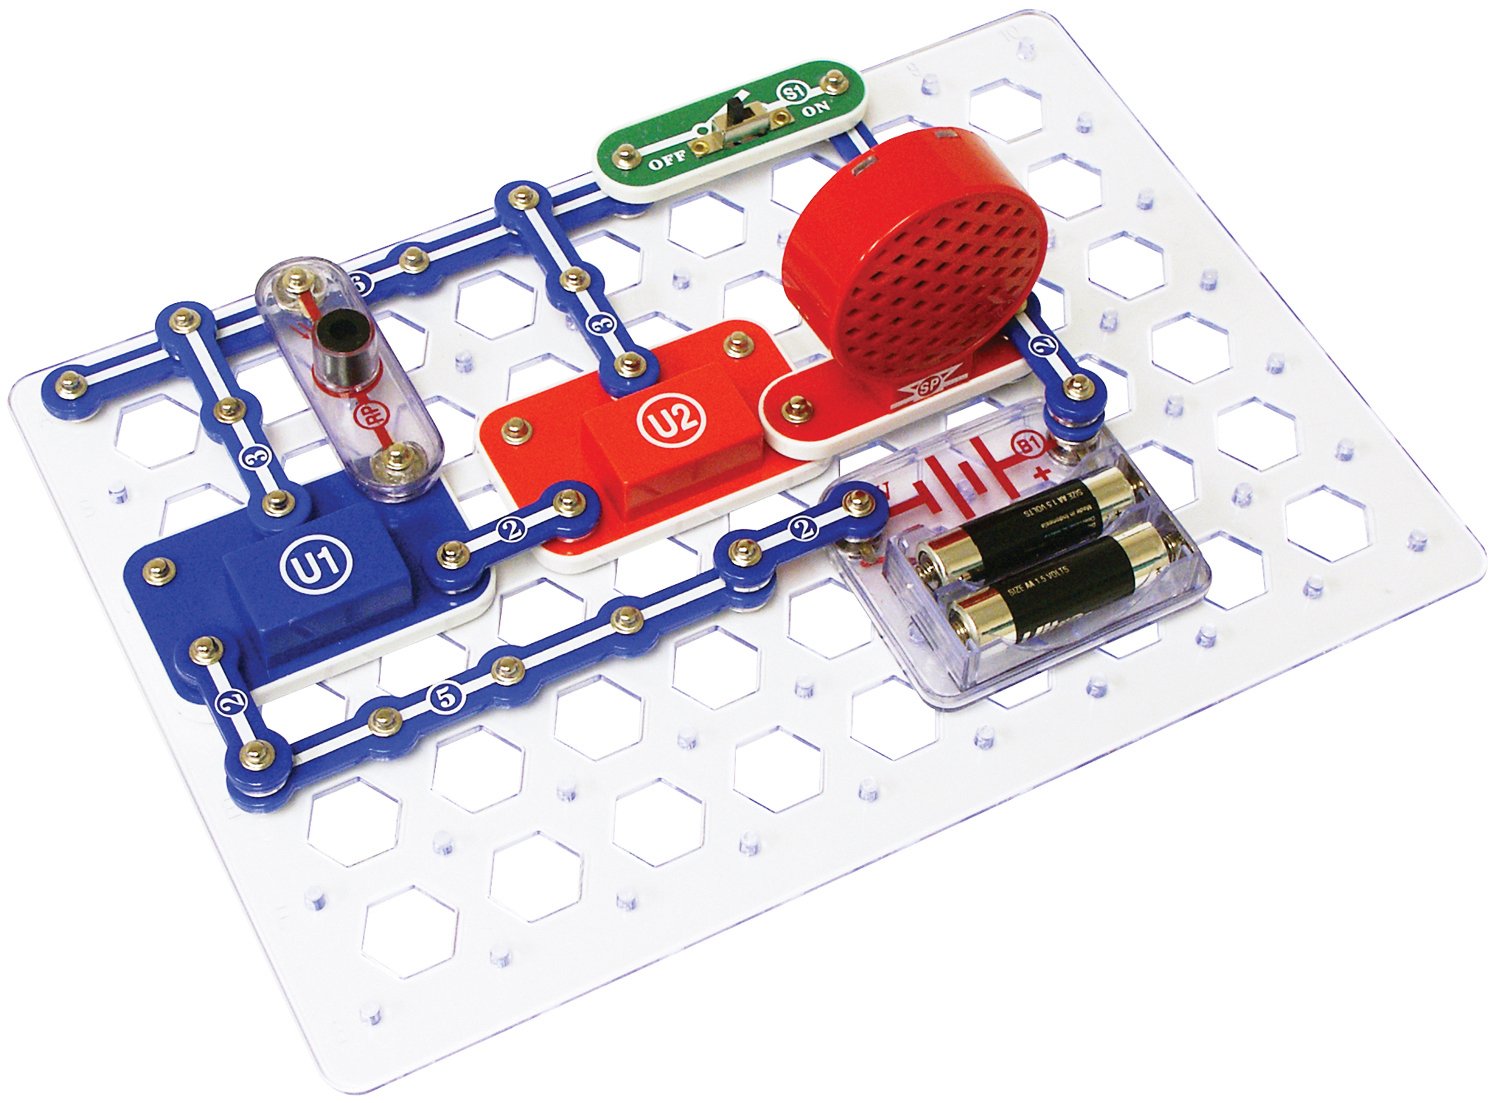 Electronics Exploration Kit, STEM Educational Toy for Kids 8 + | Creative Problem-Solving Toy